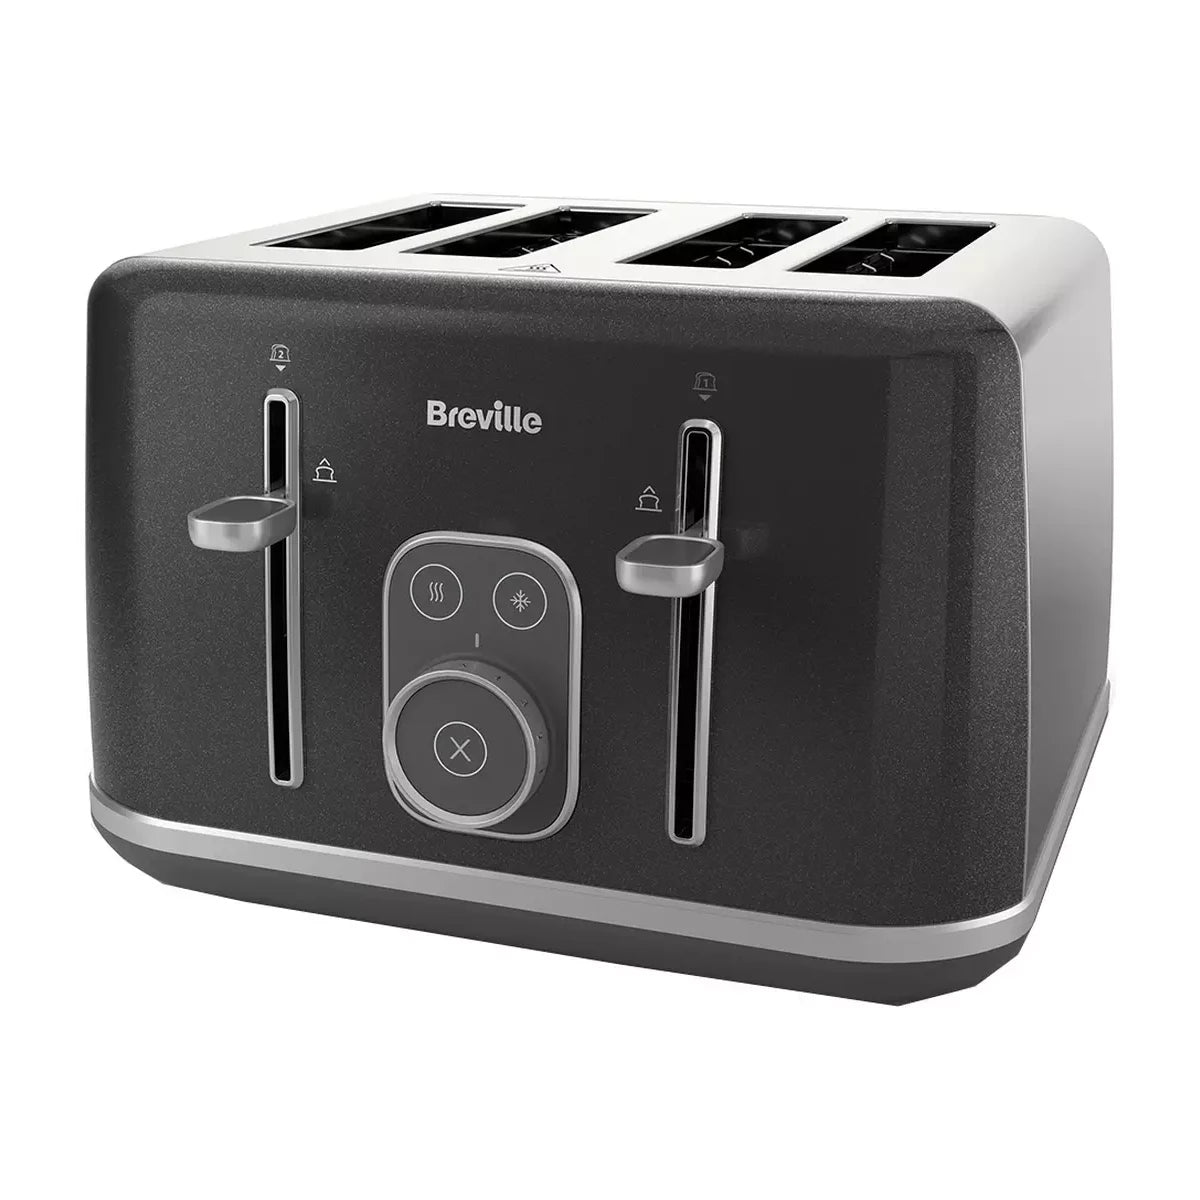 Breville Aura Shimmer Grey 4 Slice Toaster: VTR020